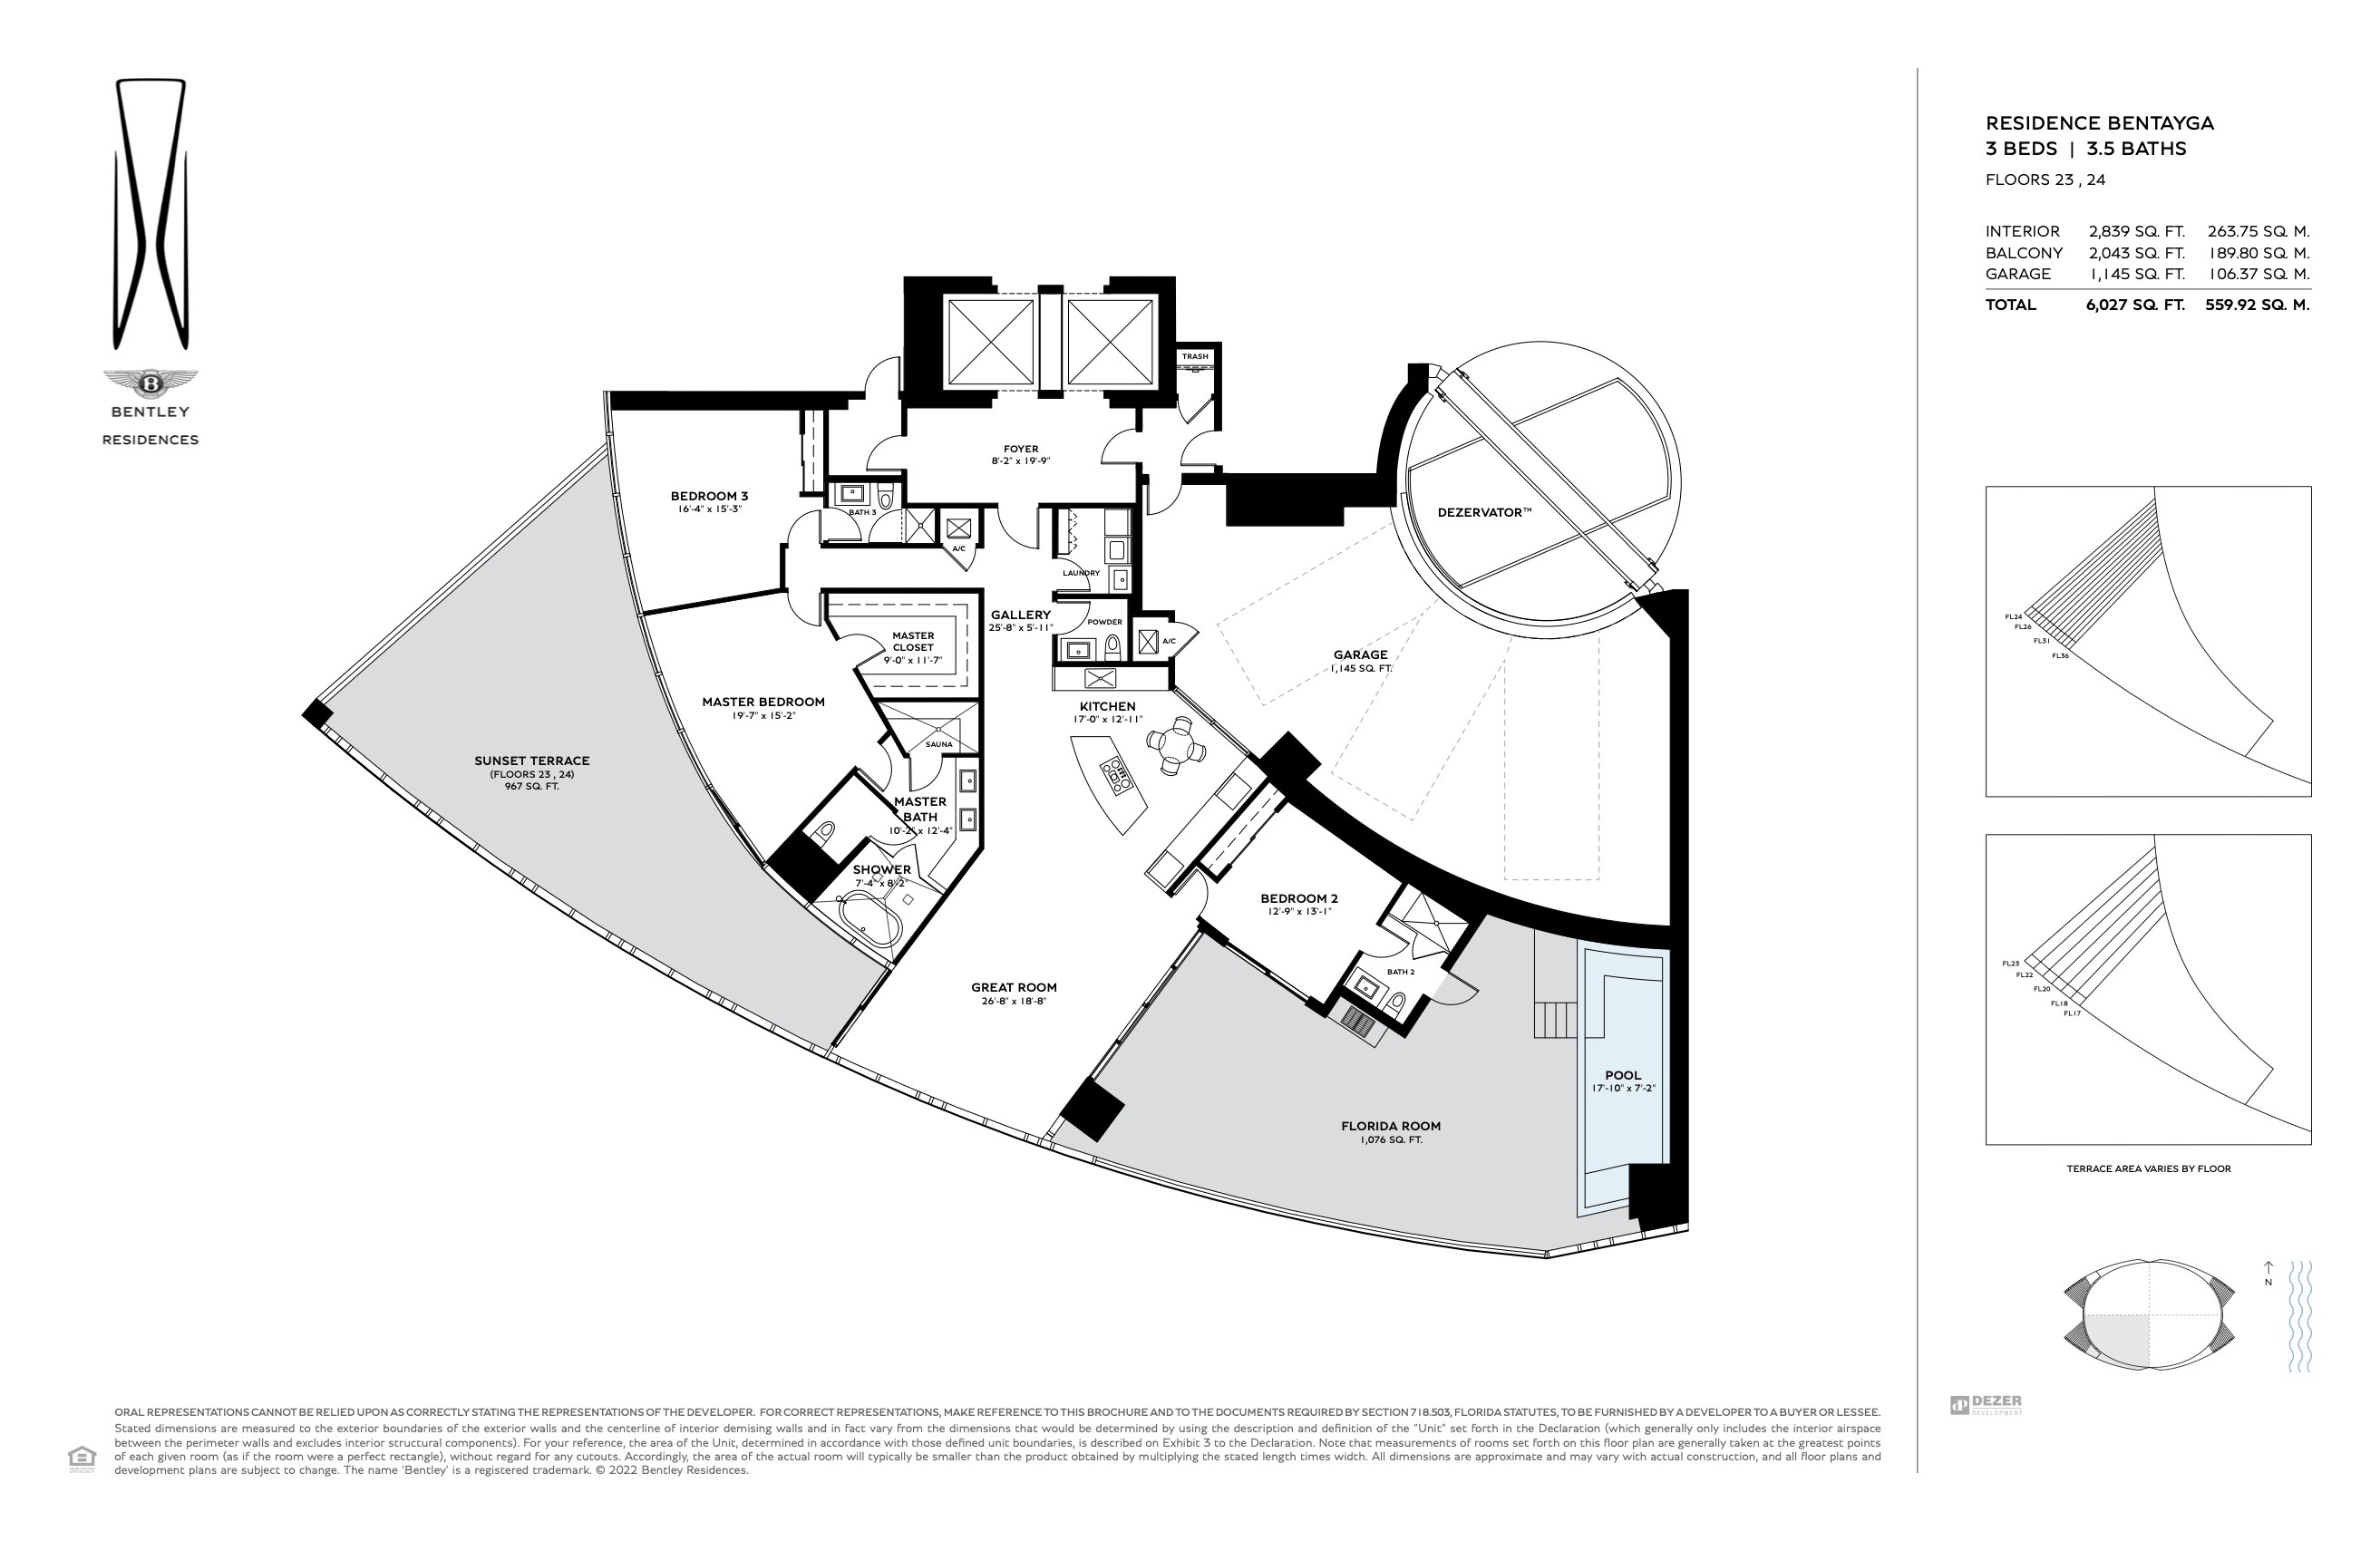 Floor Plan for The Bentley Residences Sunny Isles Floorplans, Residence Bentayga